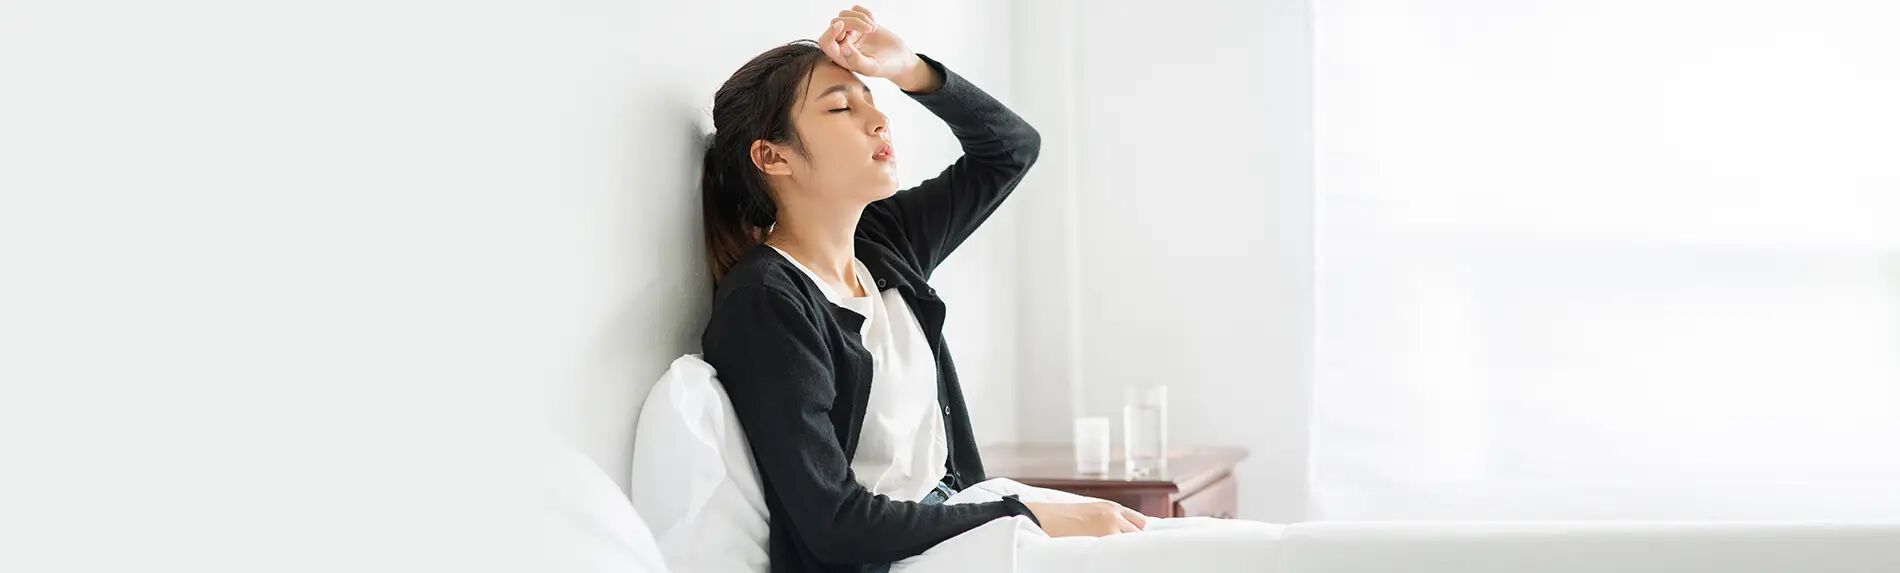 How Does Stress Affect Sleep?